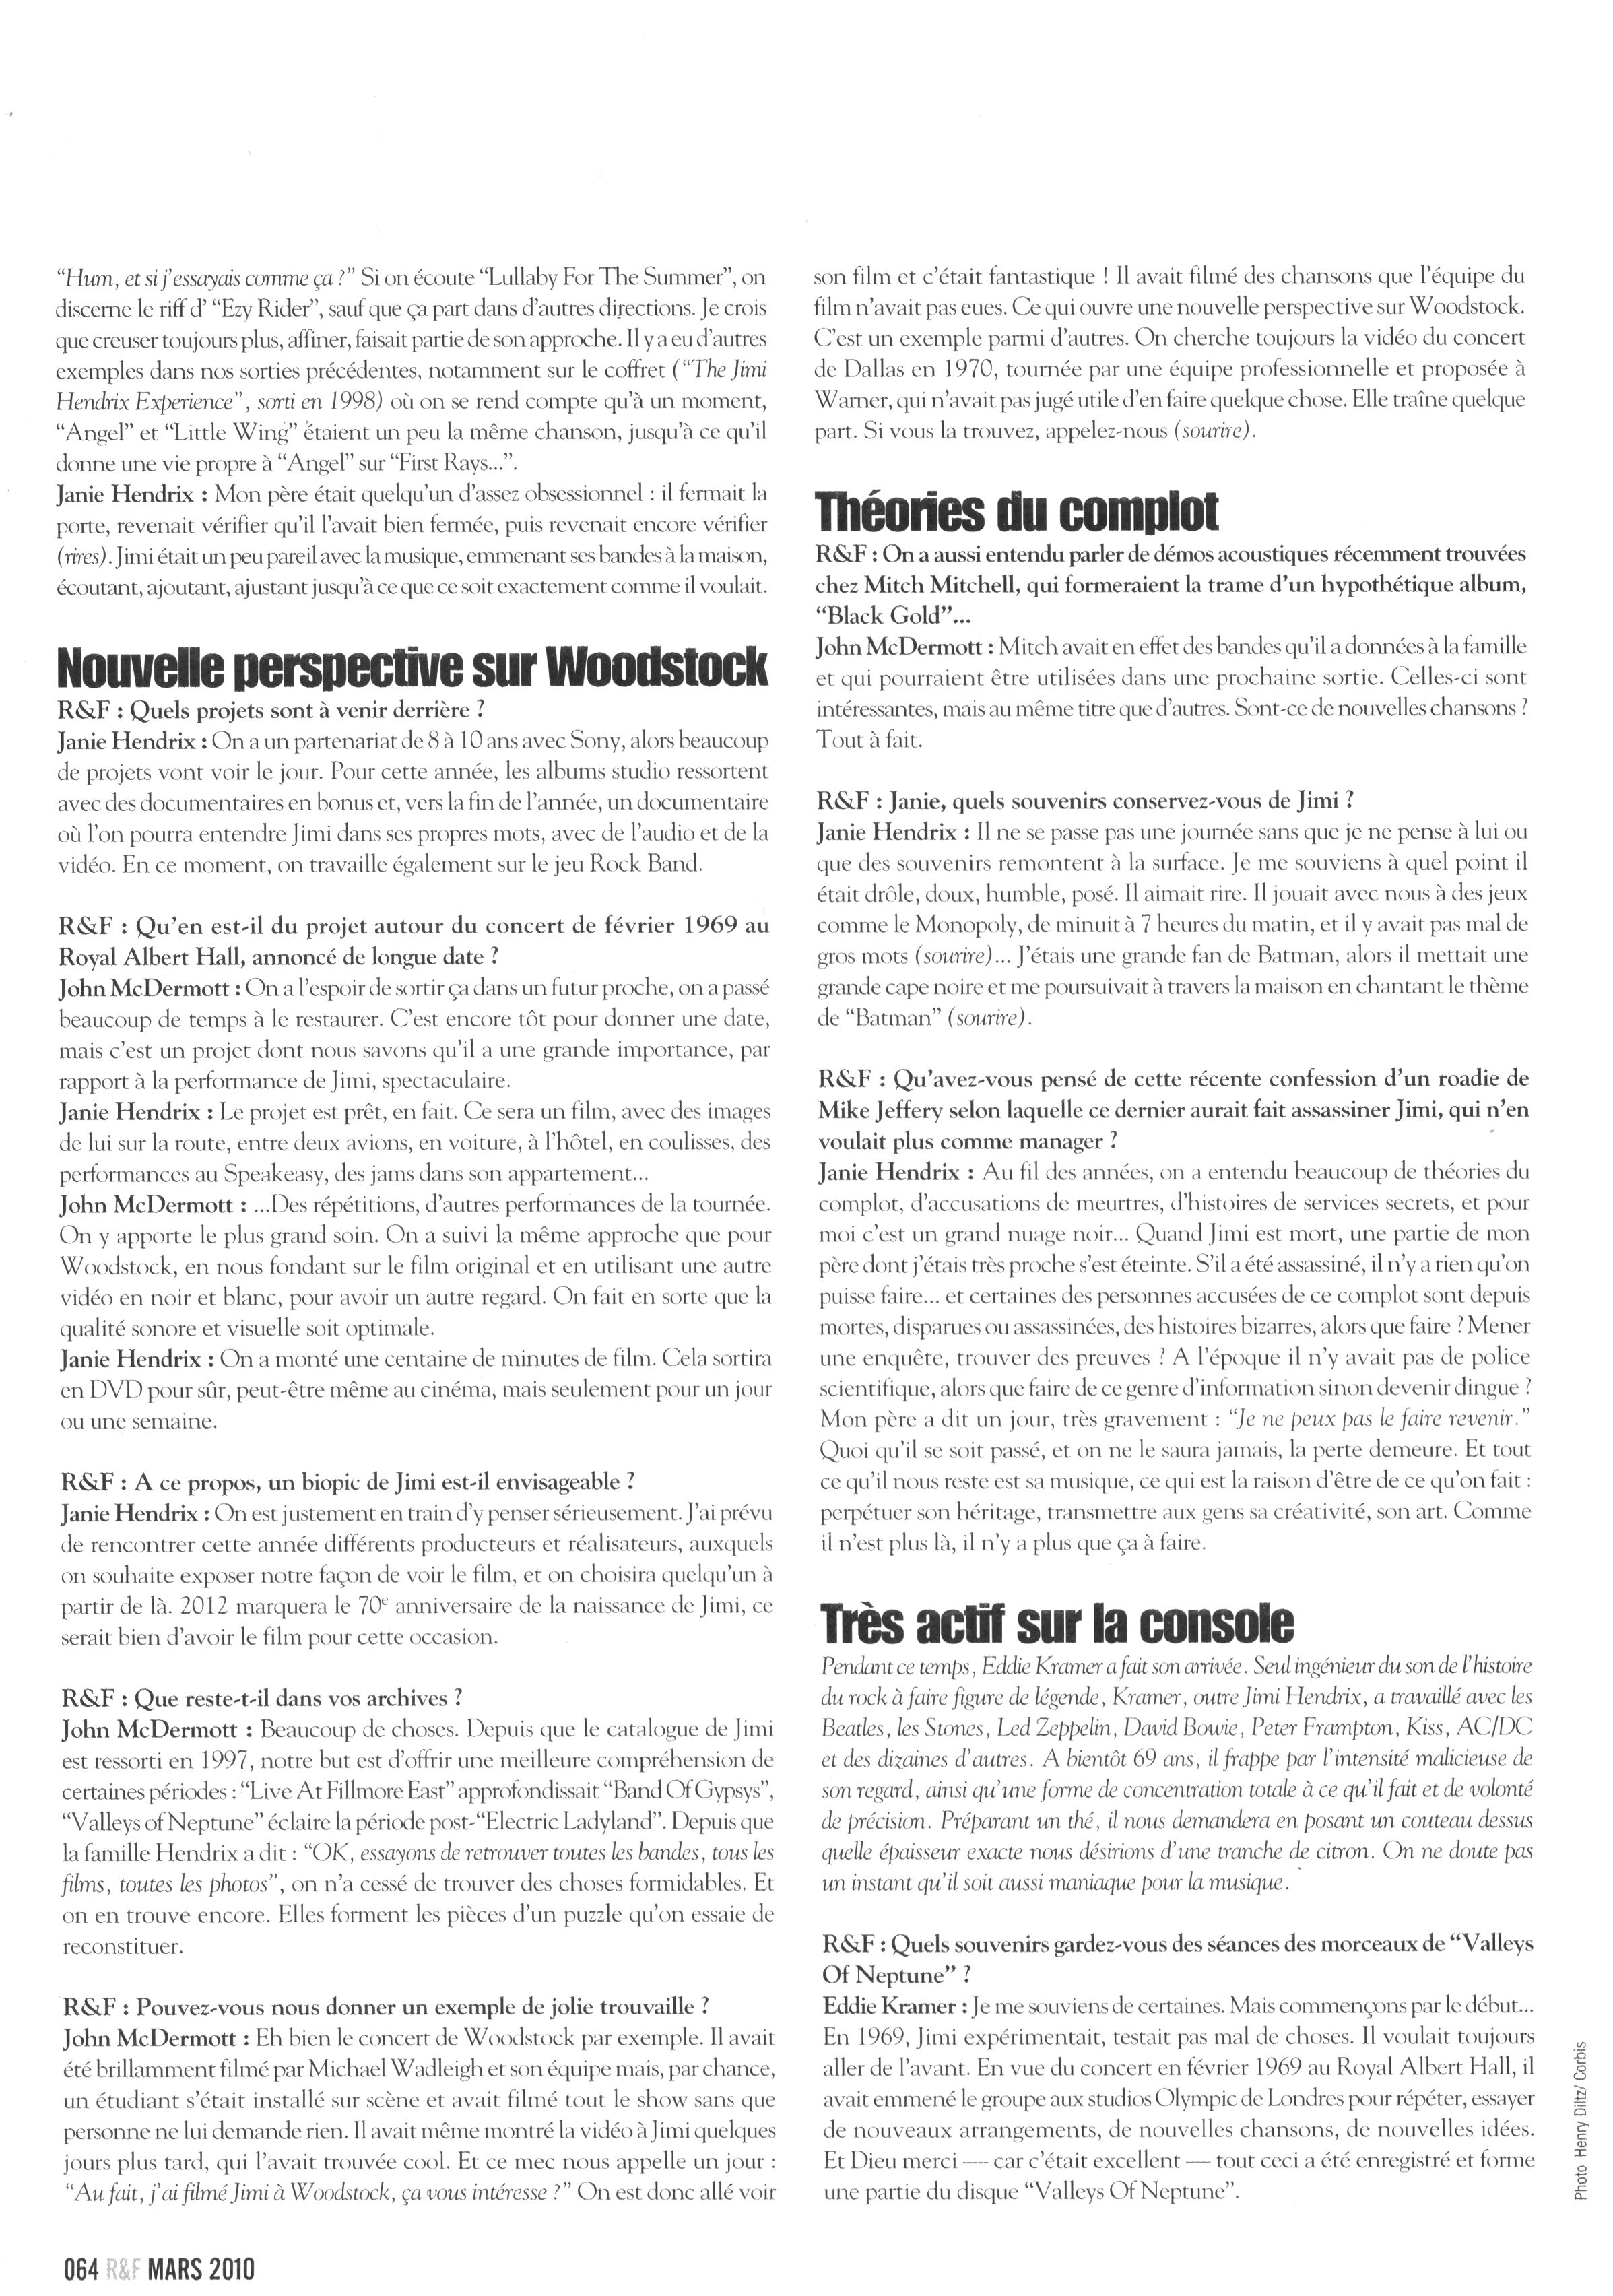 Magazines Français 1989 - 2014 RocketFolkMars2010Page64